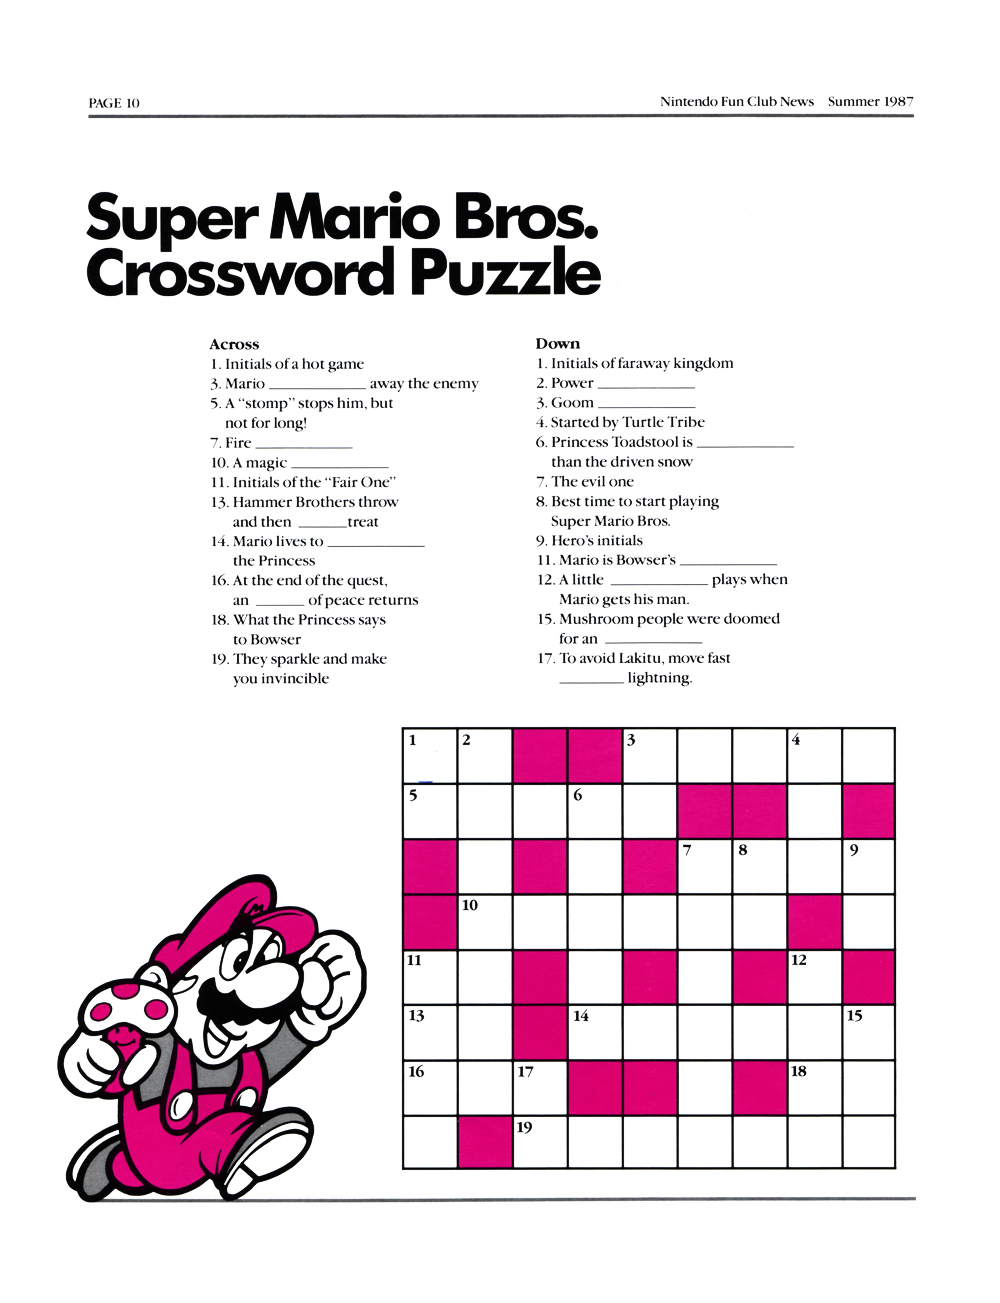 Saturday Cross Word Puzzle - Pure Nintendo